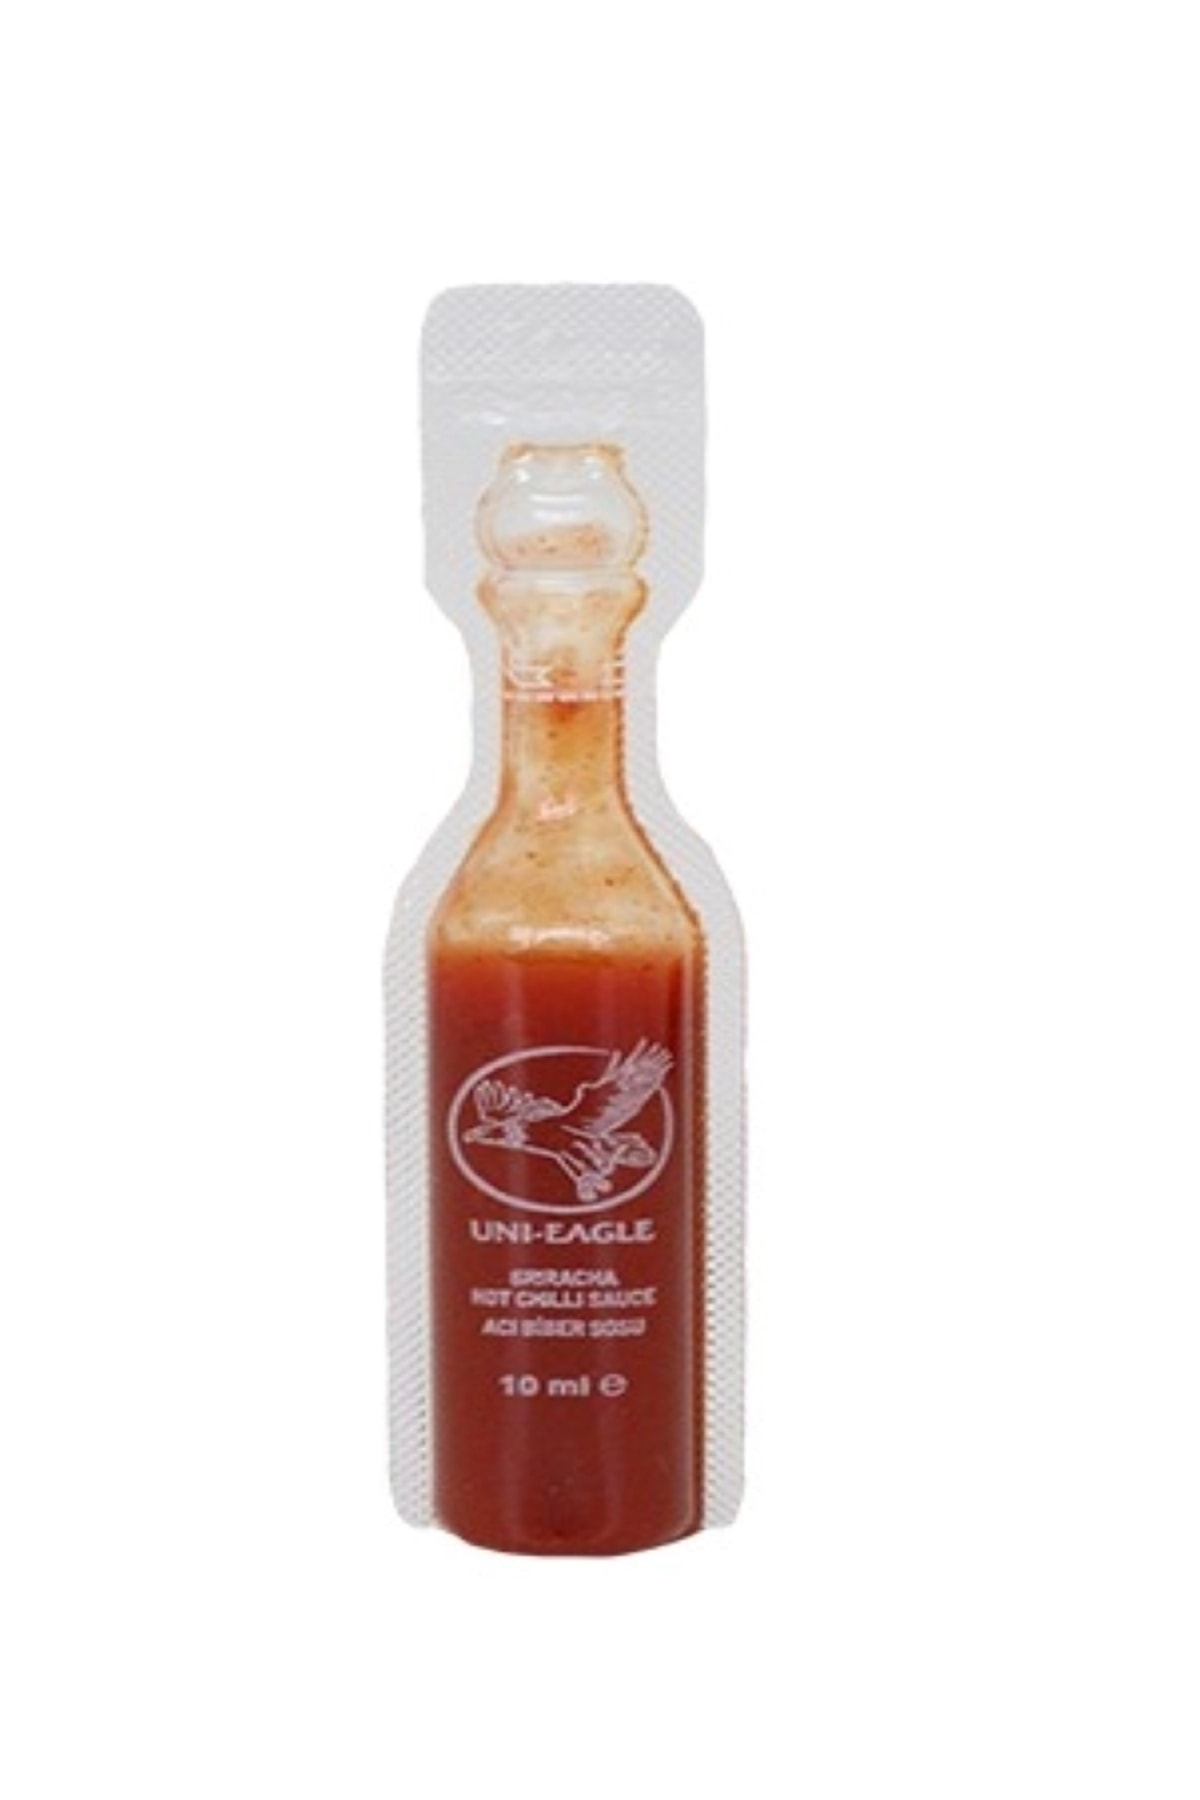 Uni Eagle Sriracha Saşe 10 ml x 1000 Adet resmi